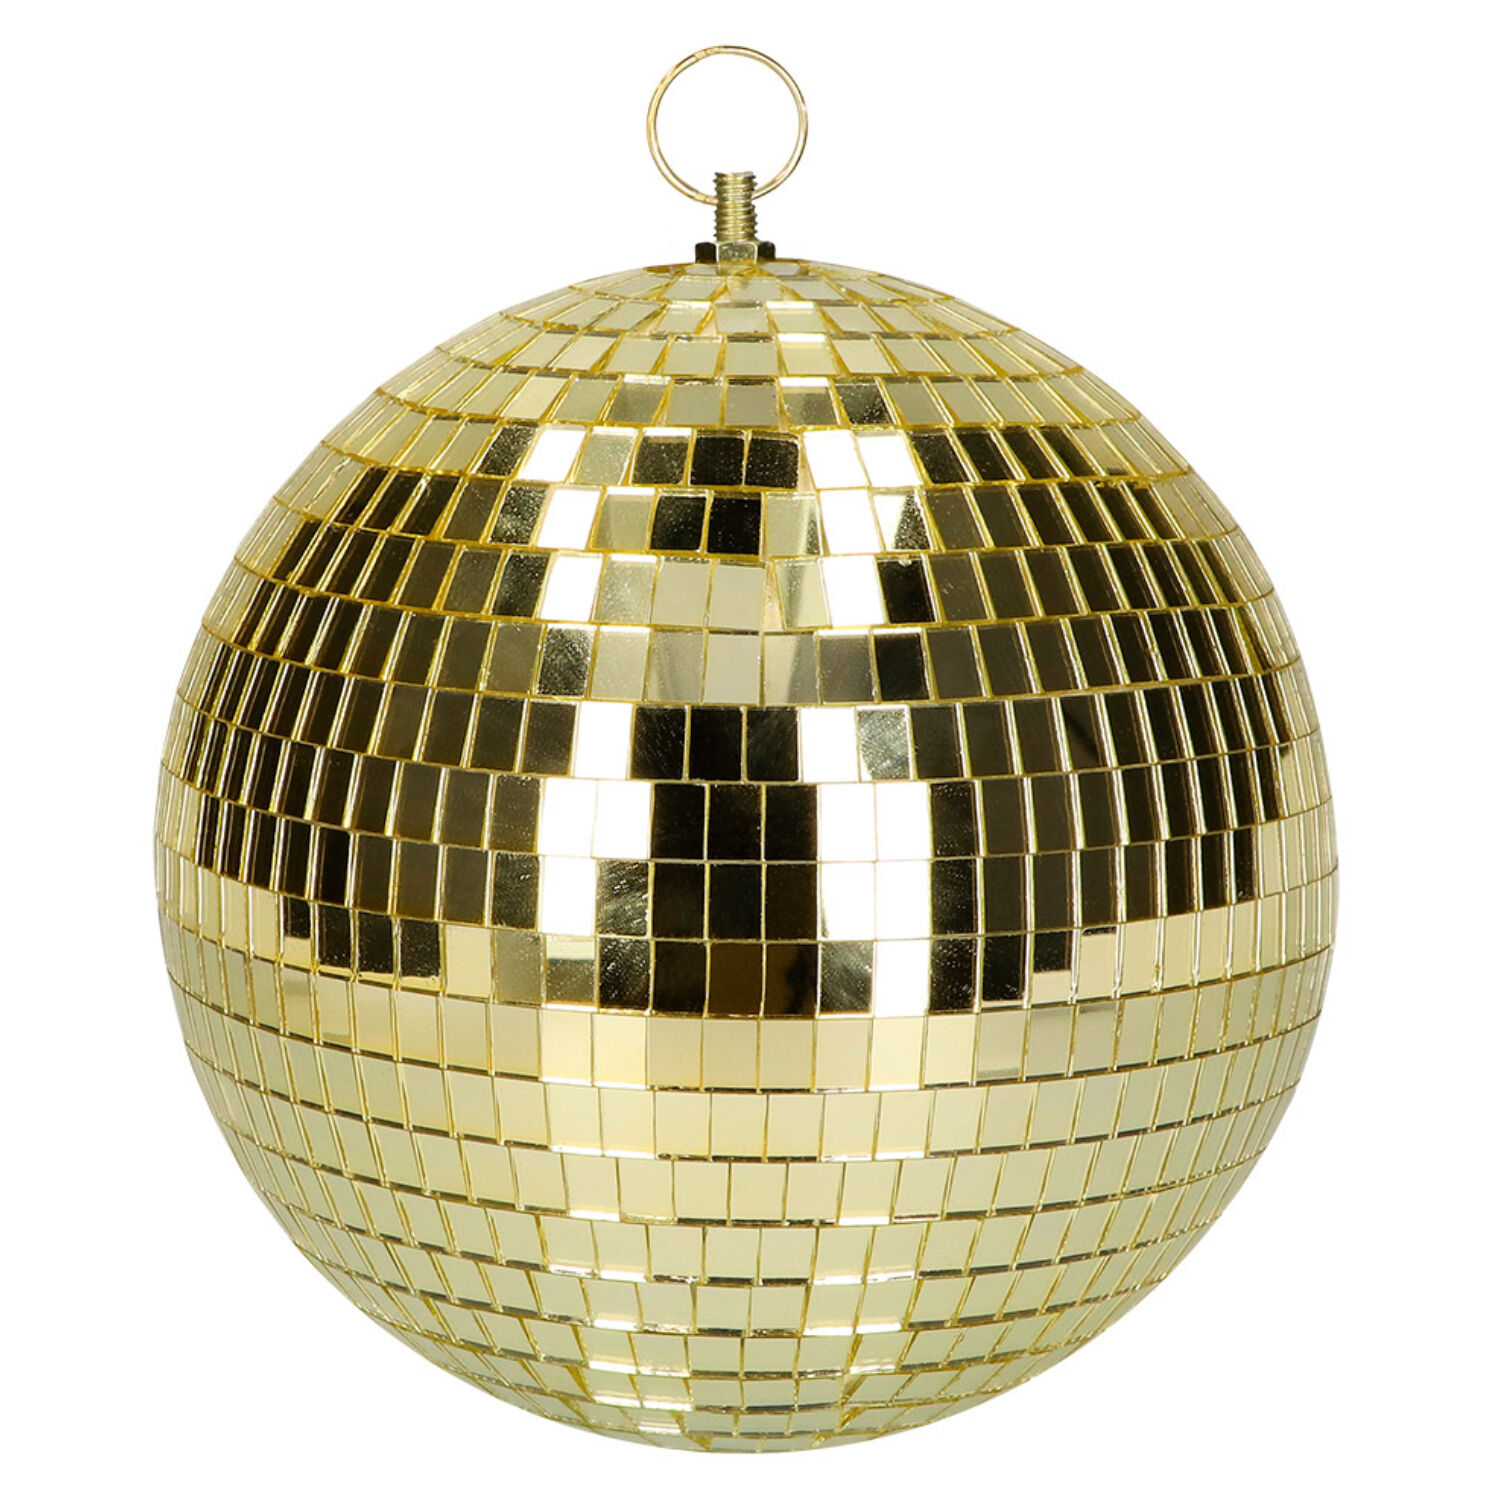 NEU Disco-Kugel gold, Ø20cm, mit Aufhänger